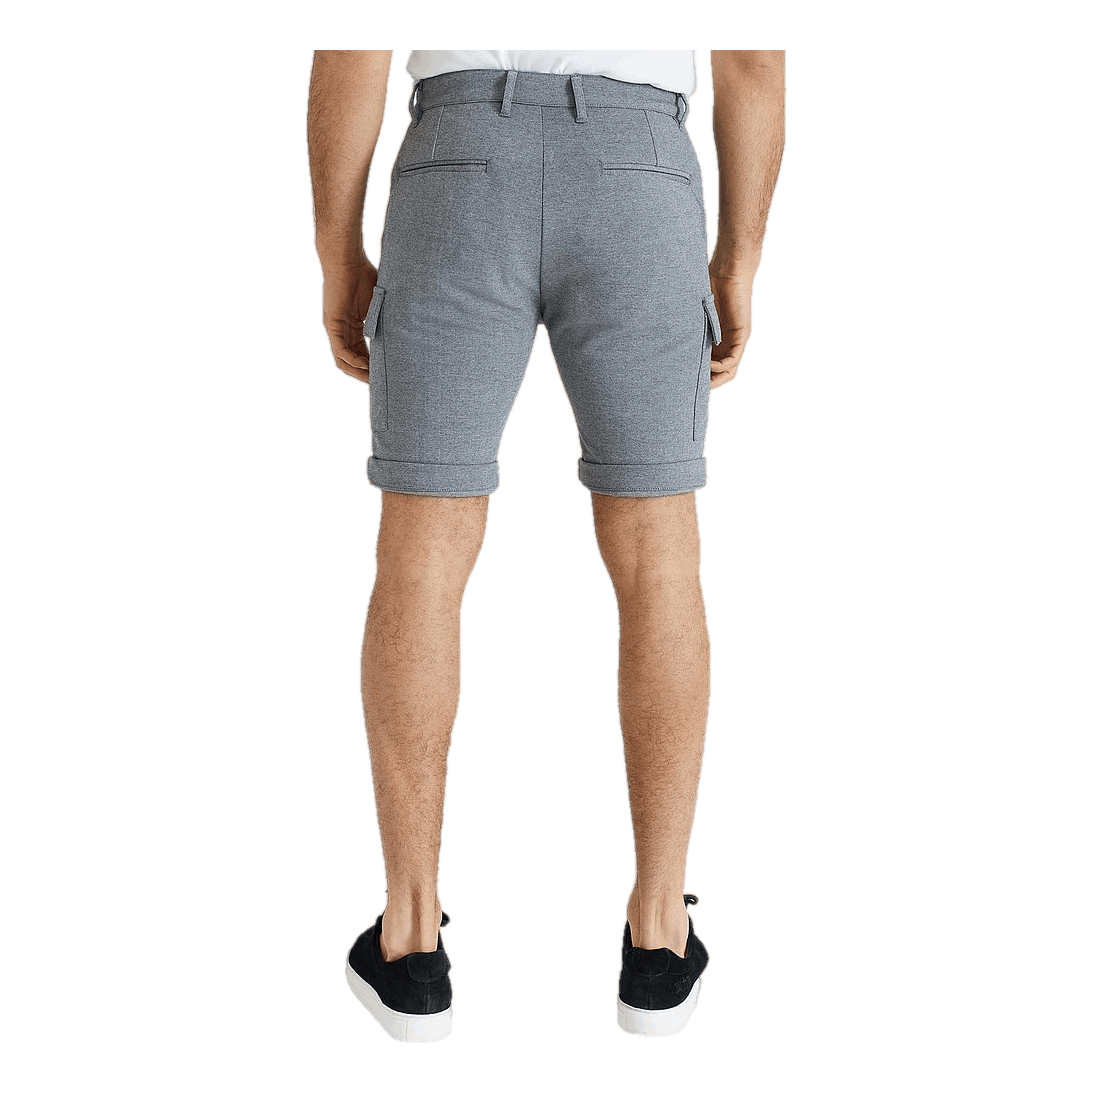 Soft Cargo Shorts Grey